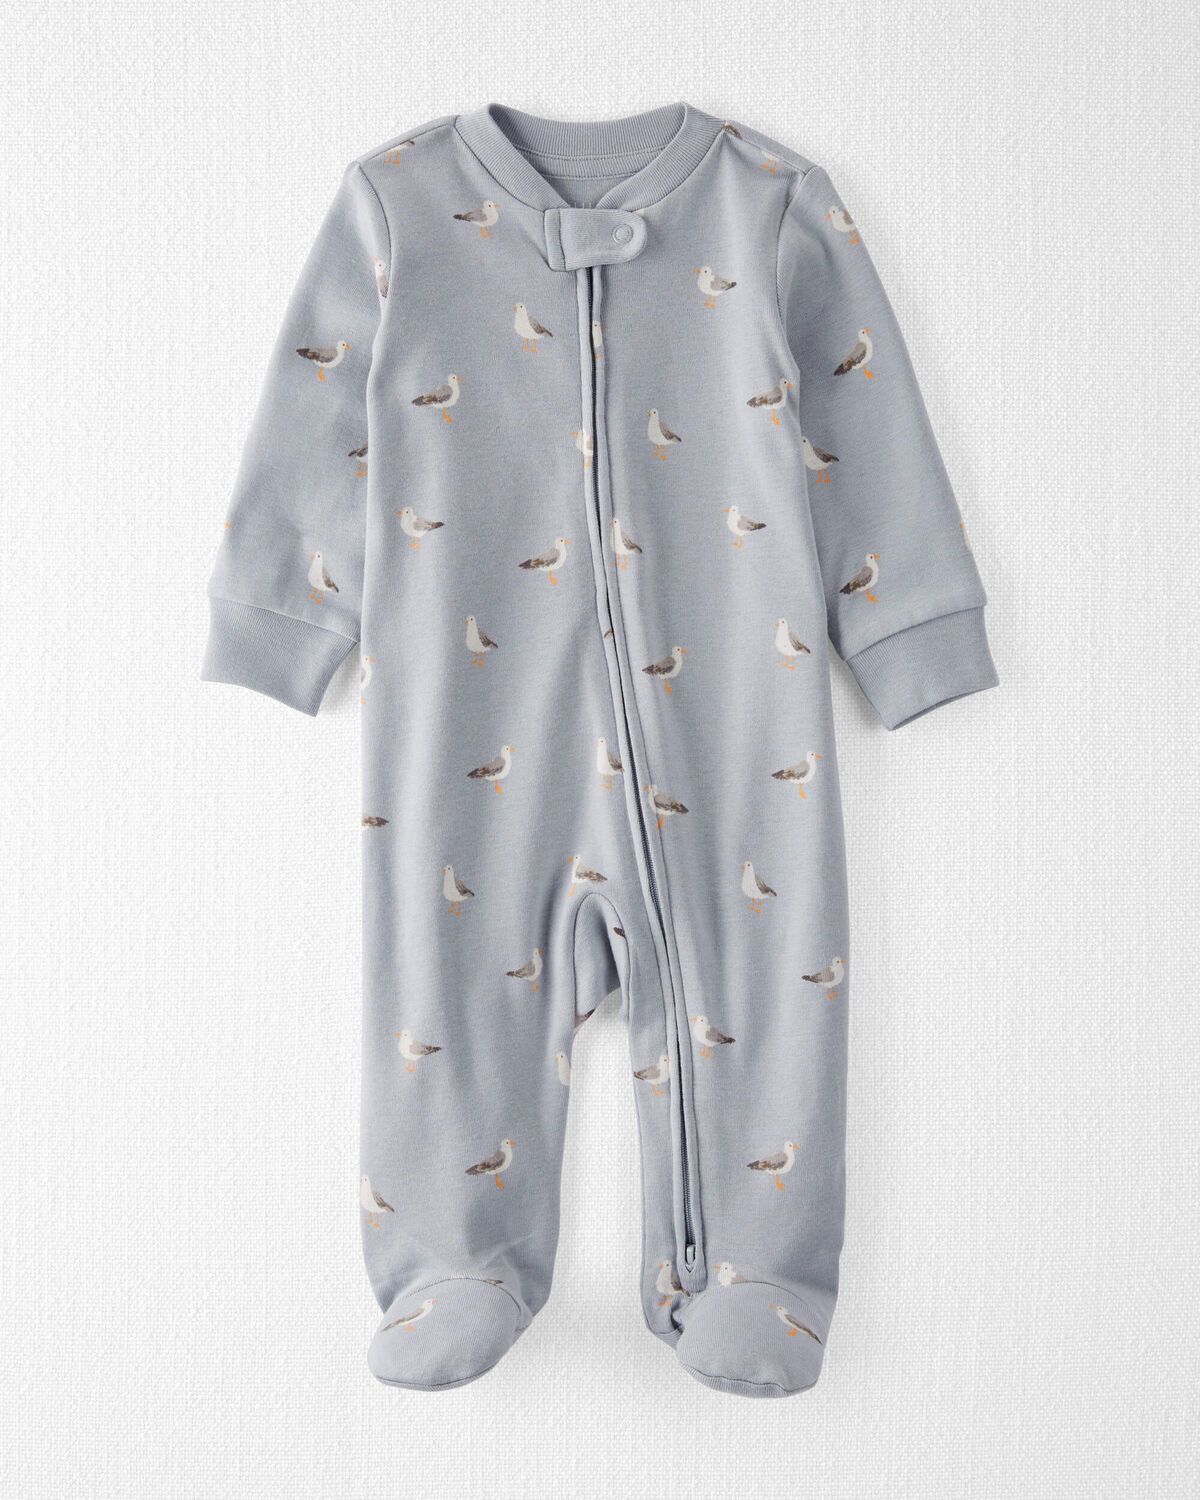 Seagull Print Baby Organic Cotton Sleep & Play Pajamas
 | carters.com | Carter's